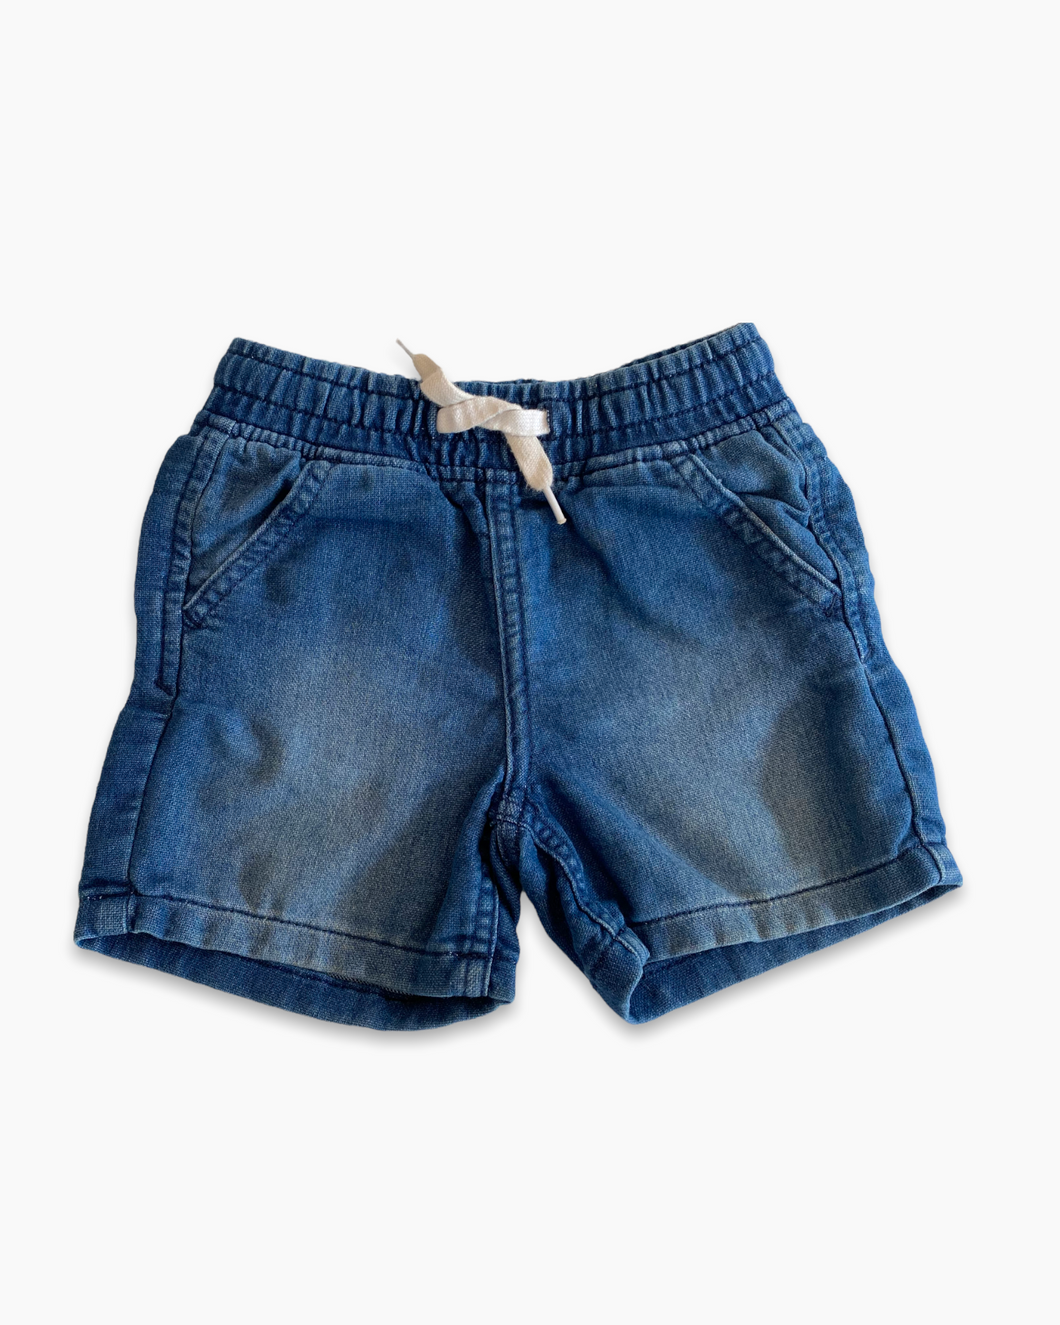 Weiche Jeans-Shorts blau Gr. 92